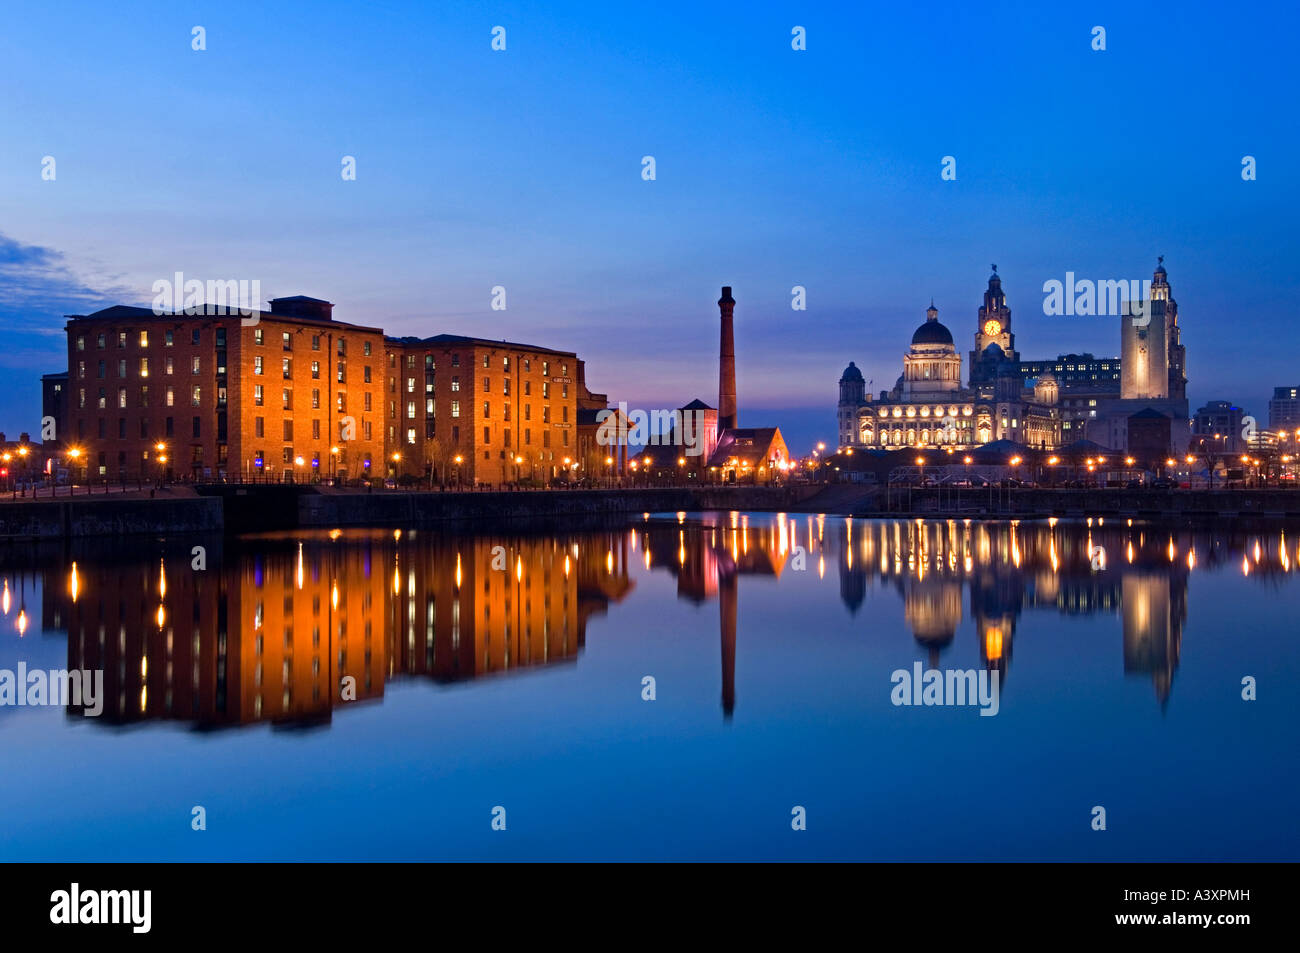 The Pumphose, Liver Buildings & Albert Dock Reflected in Salthouse Dock, Liverpool, Merseyside, England, UK Stock Photo